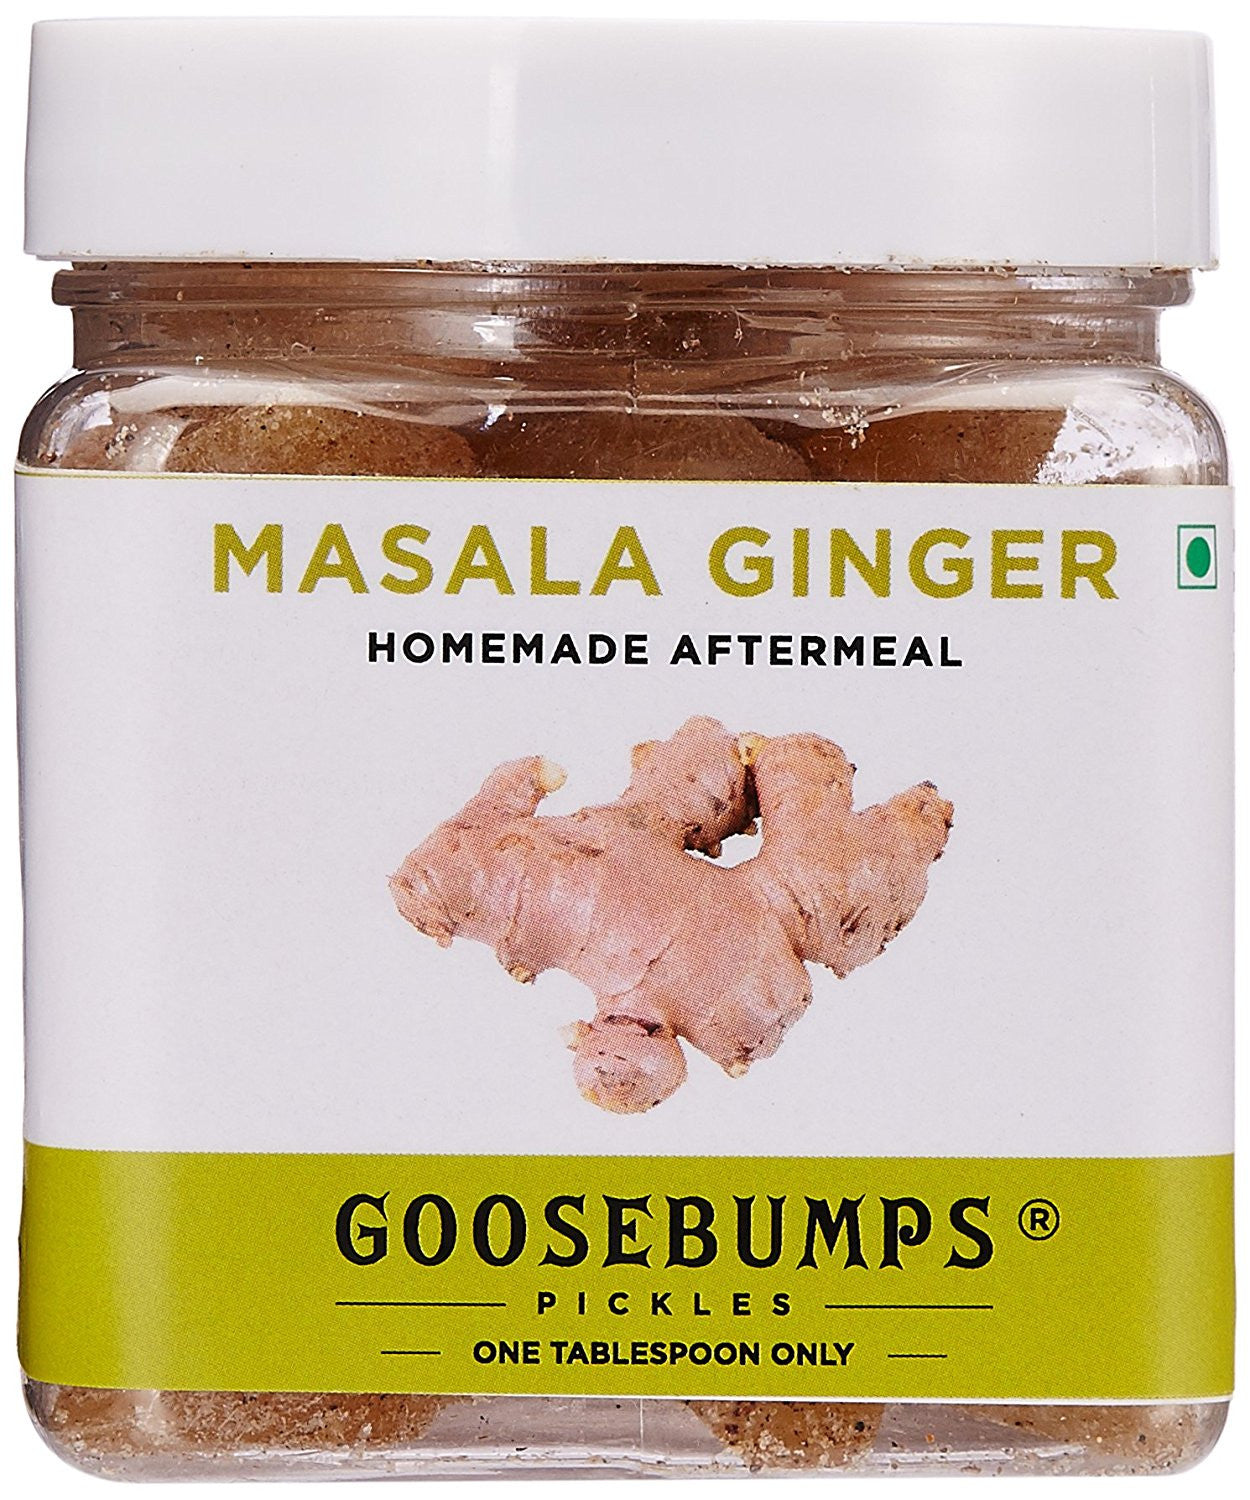 Goosebumps Pickles Masala Ginger (India)